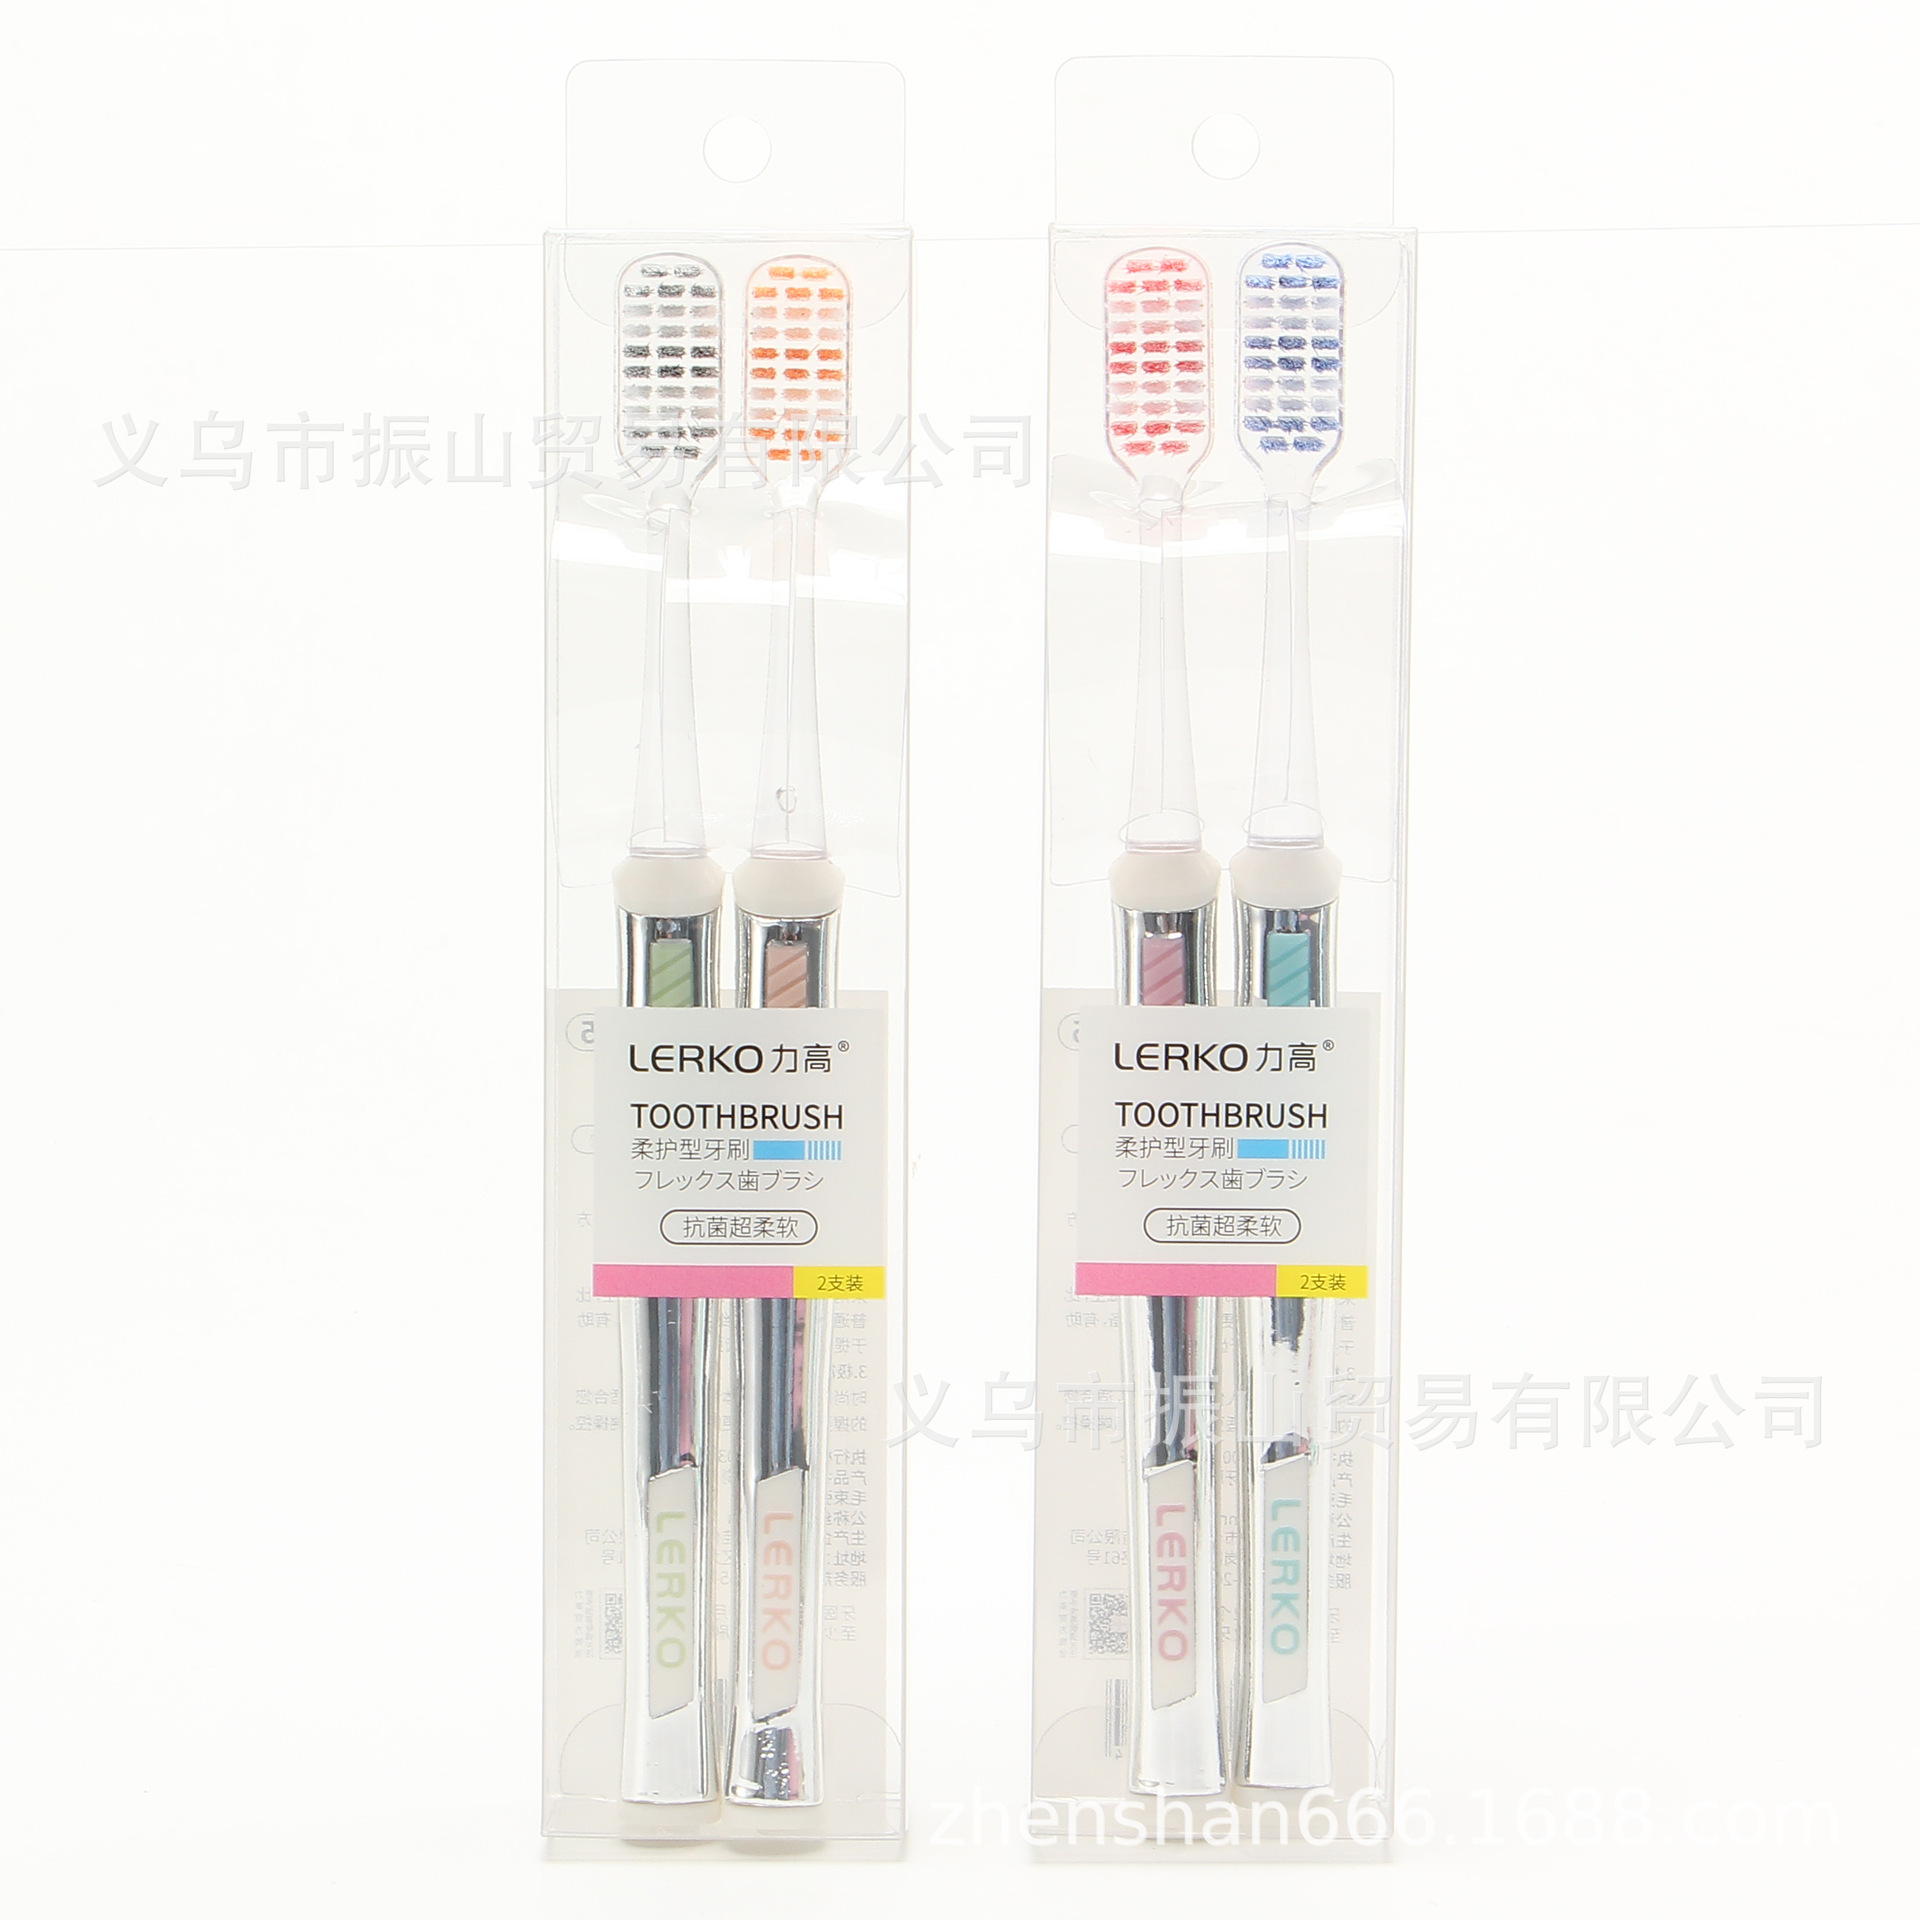 Ligao 805 PVC Box Couple Pack Streamline Brush Handle Horizontal Hair Arrangement Spiral Soft Hair Toothbrush